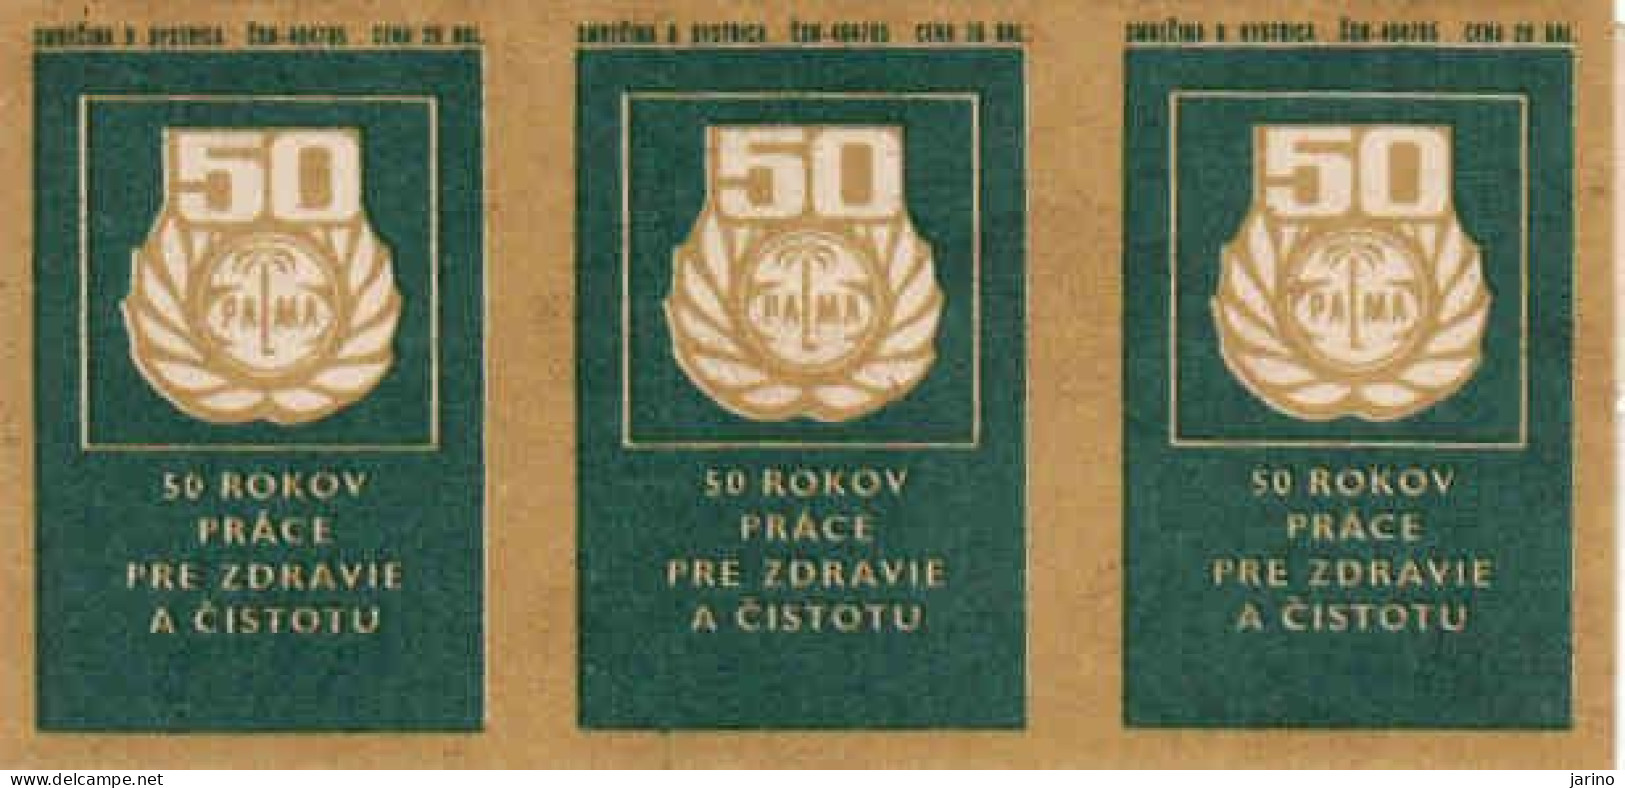 Slovakia - 3 Matchbox Labels - 50 Years Of The PALMA Fat Plant - Boites D'allumettes - Etiquettes